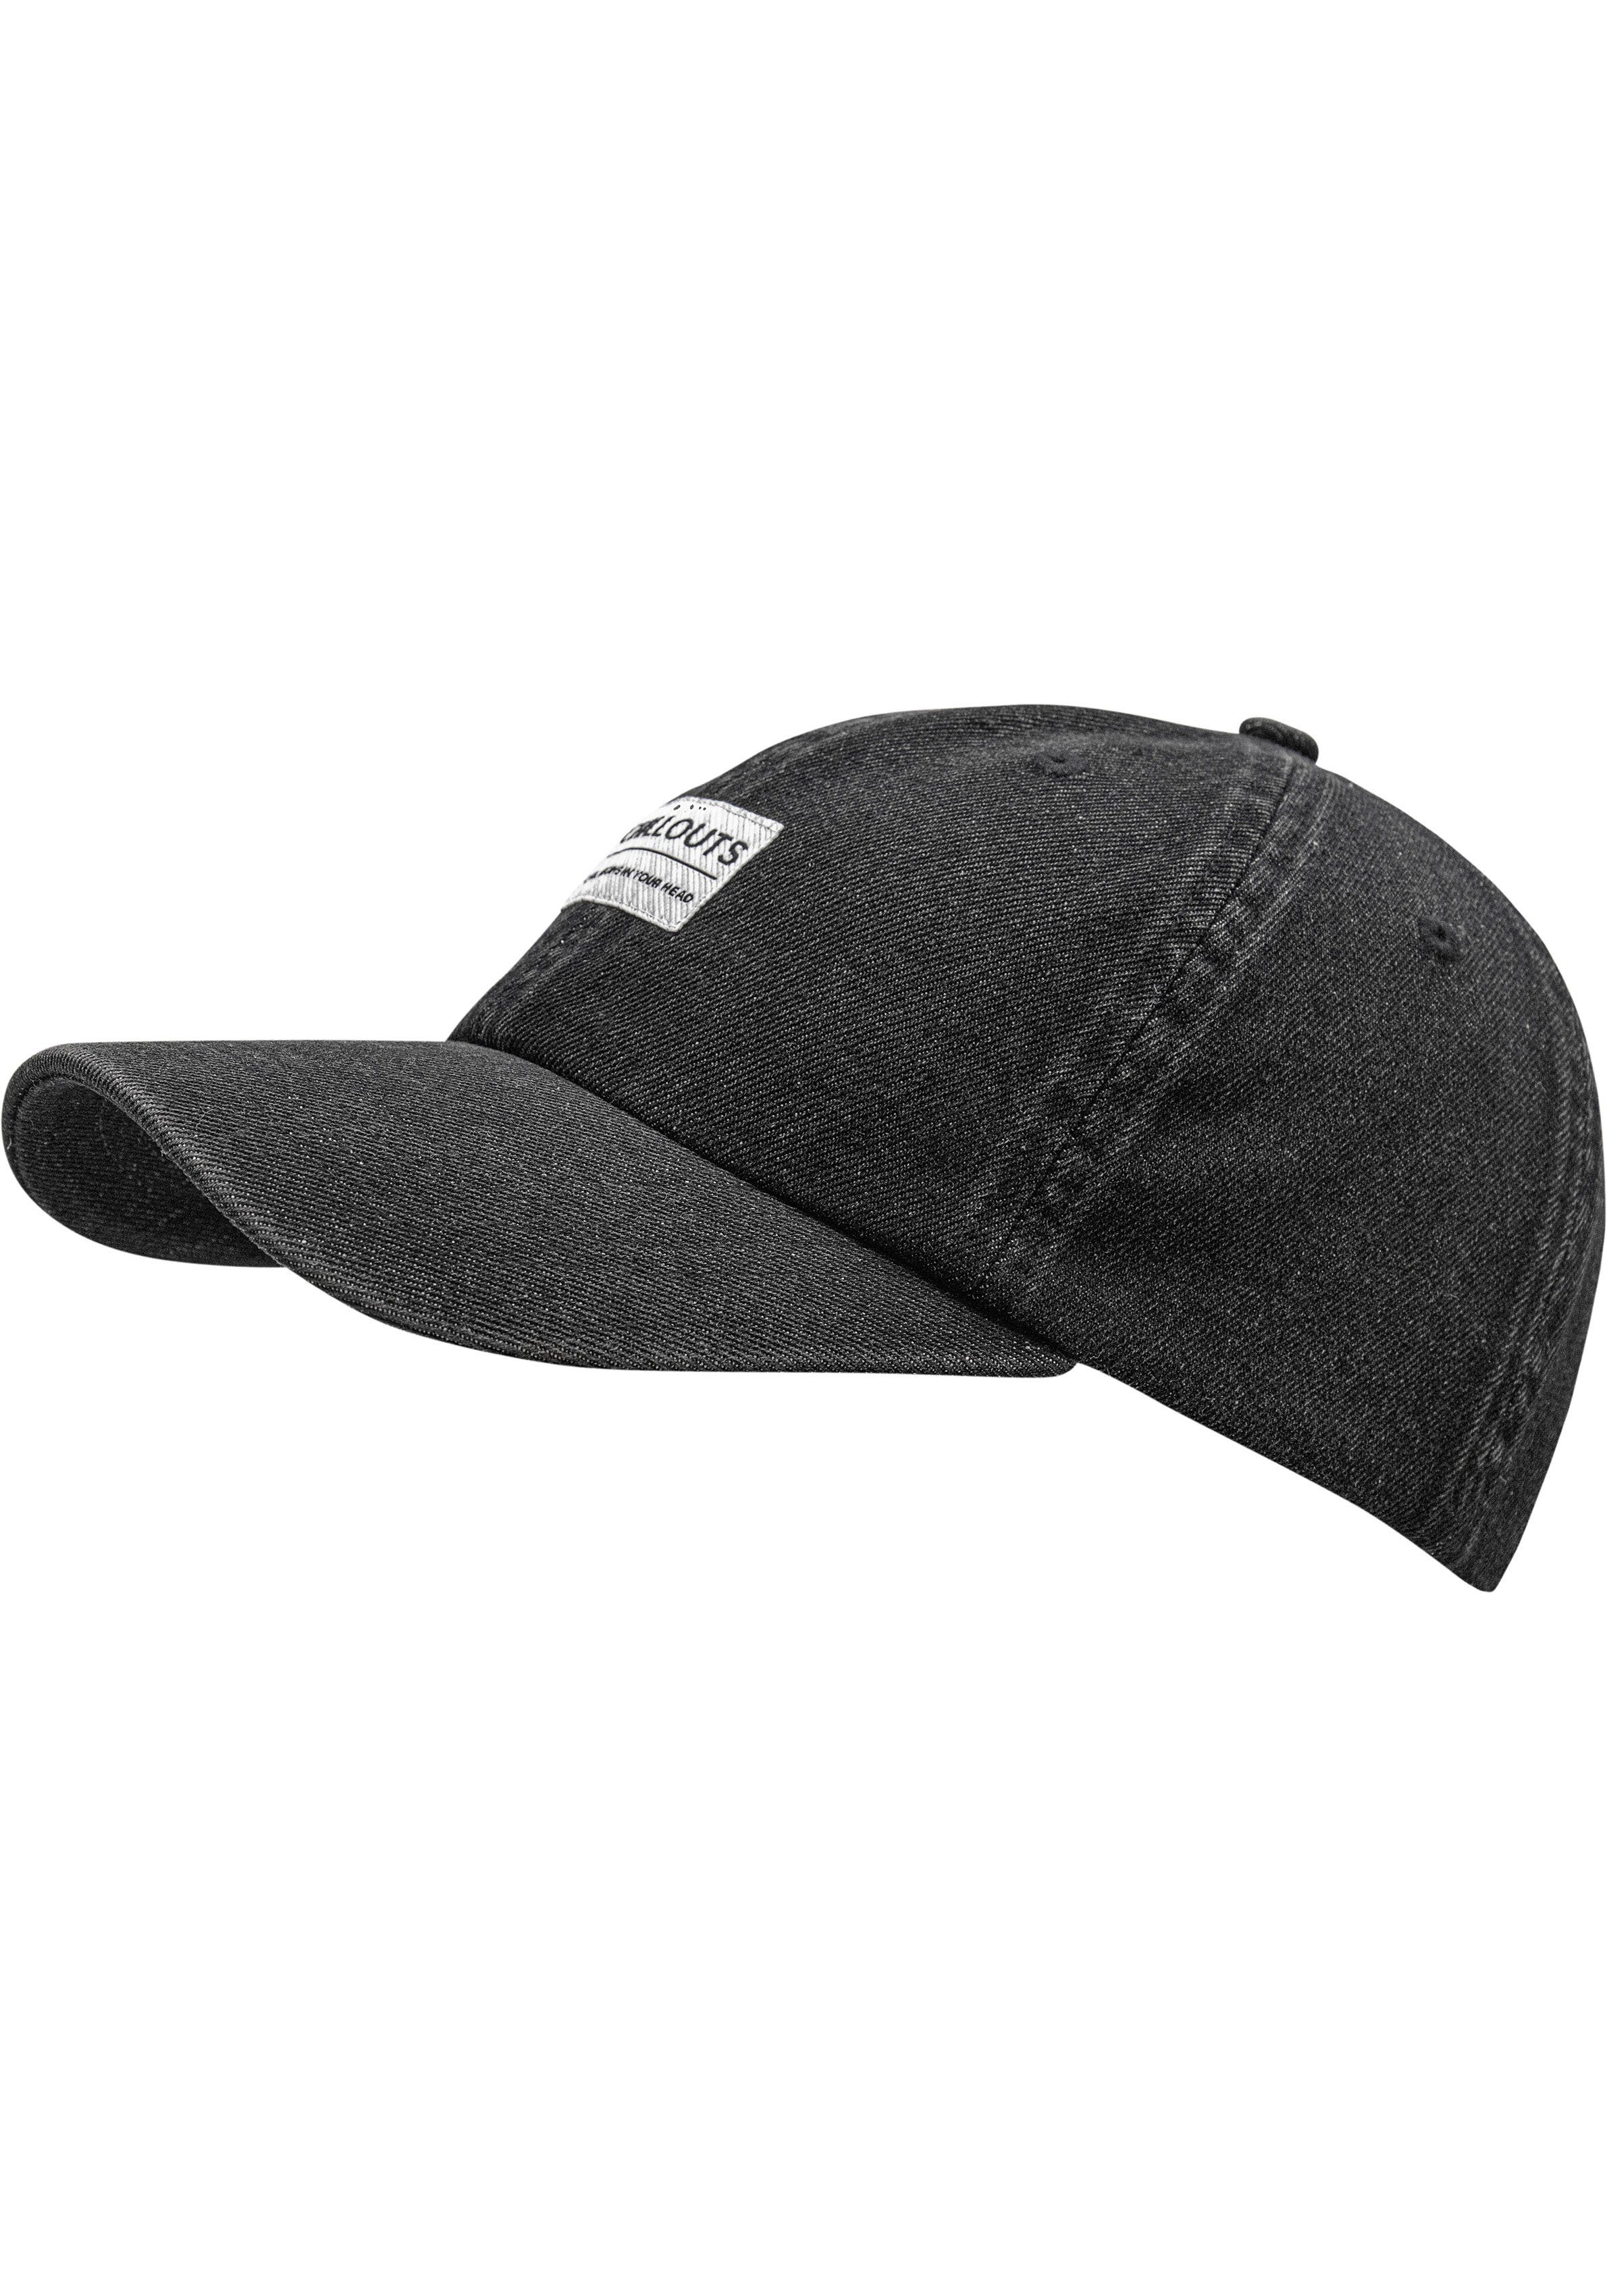 schwarz chillouts Baseball Kenitra Cap Hat